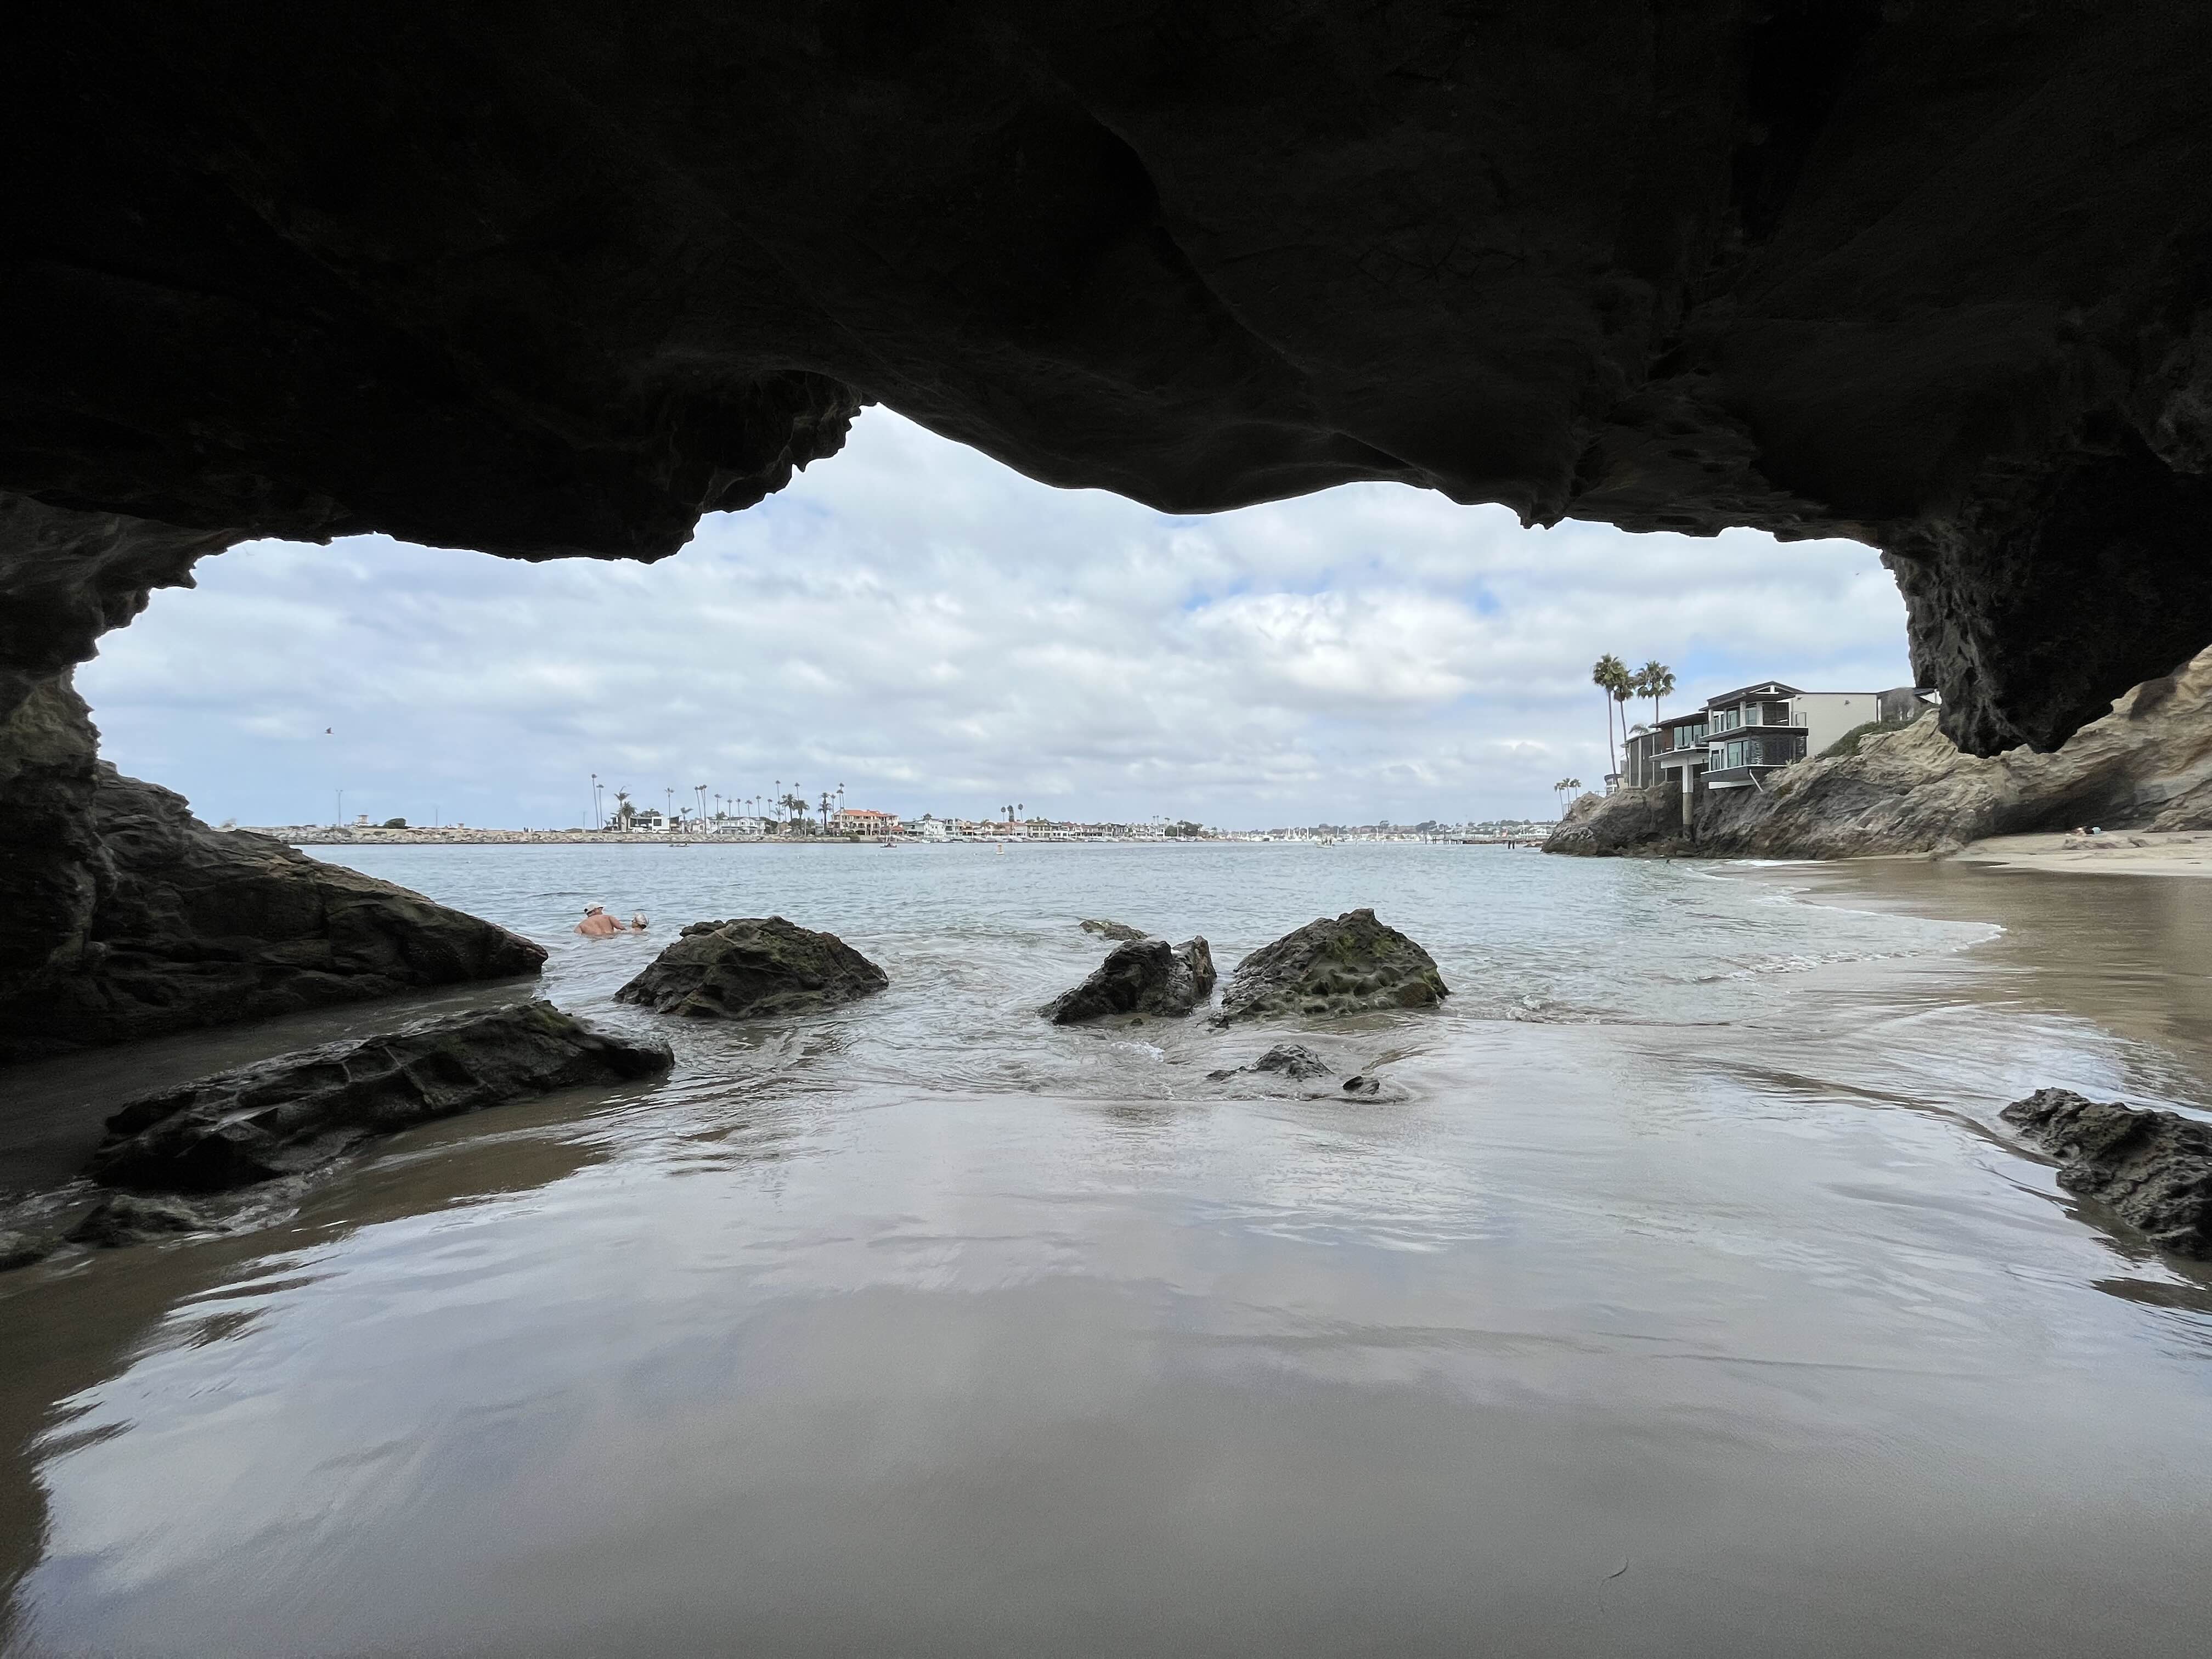 Pirate's Cove Beach 동굴안에서 찍은 바닷가에 모습입니다.